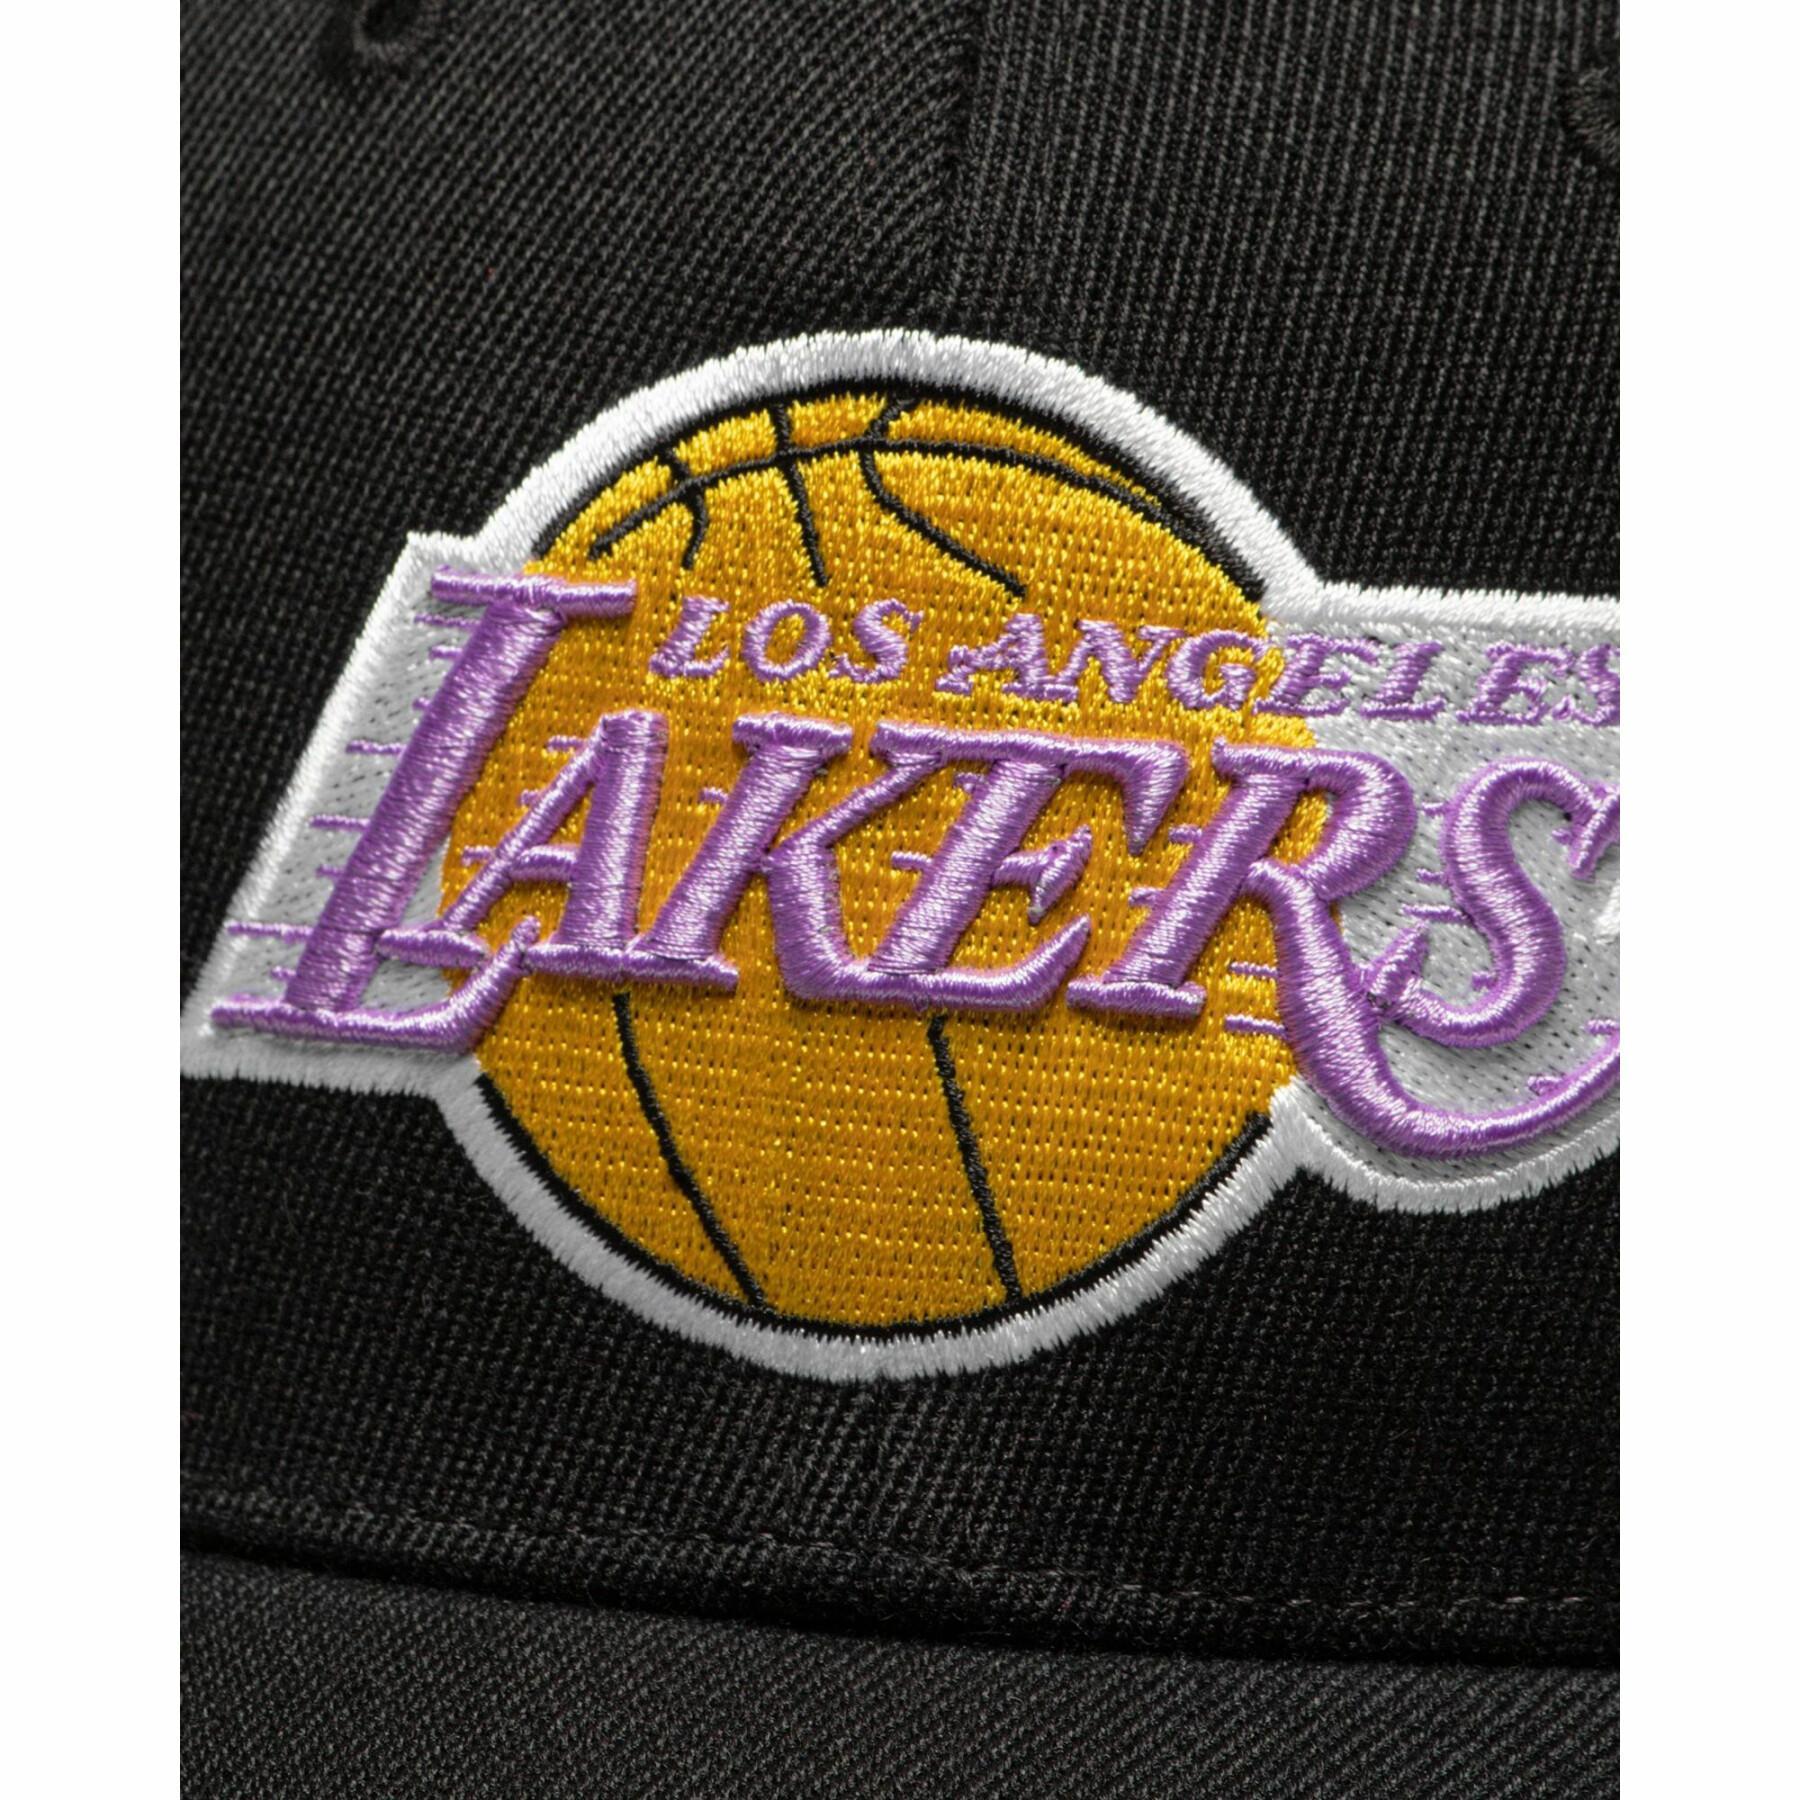 Gorra snapback clásica Los Angeles Lakers